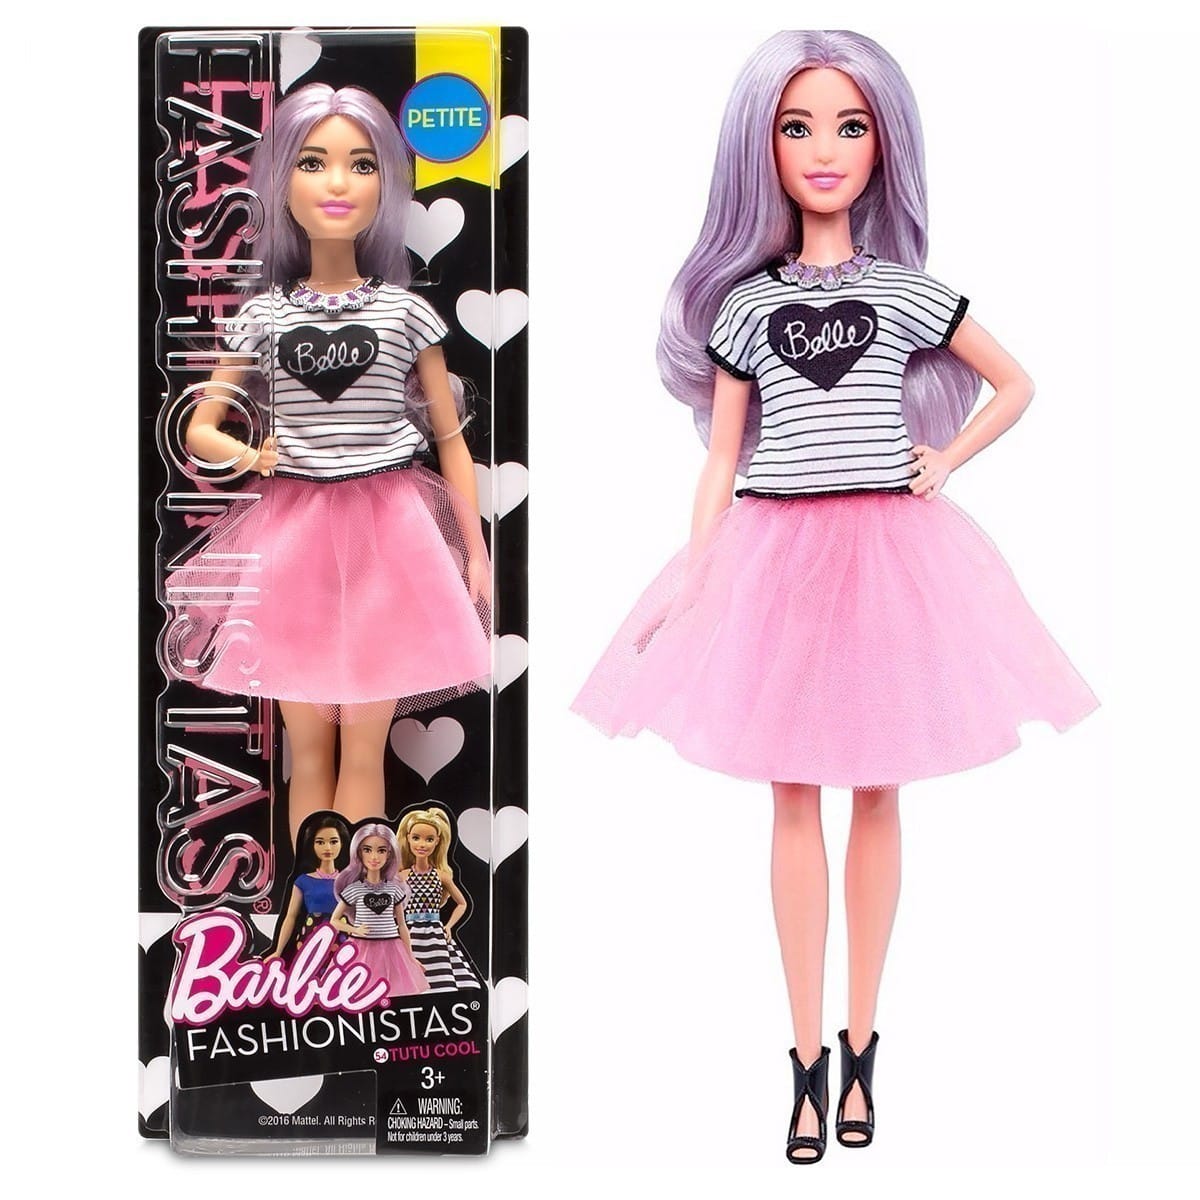 Barbie - Fashionistas Doll #54 Tutu Cool - Petite